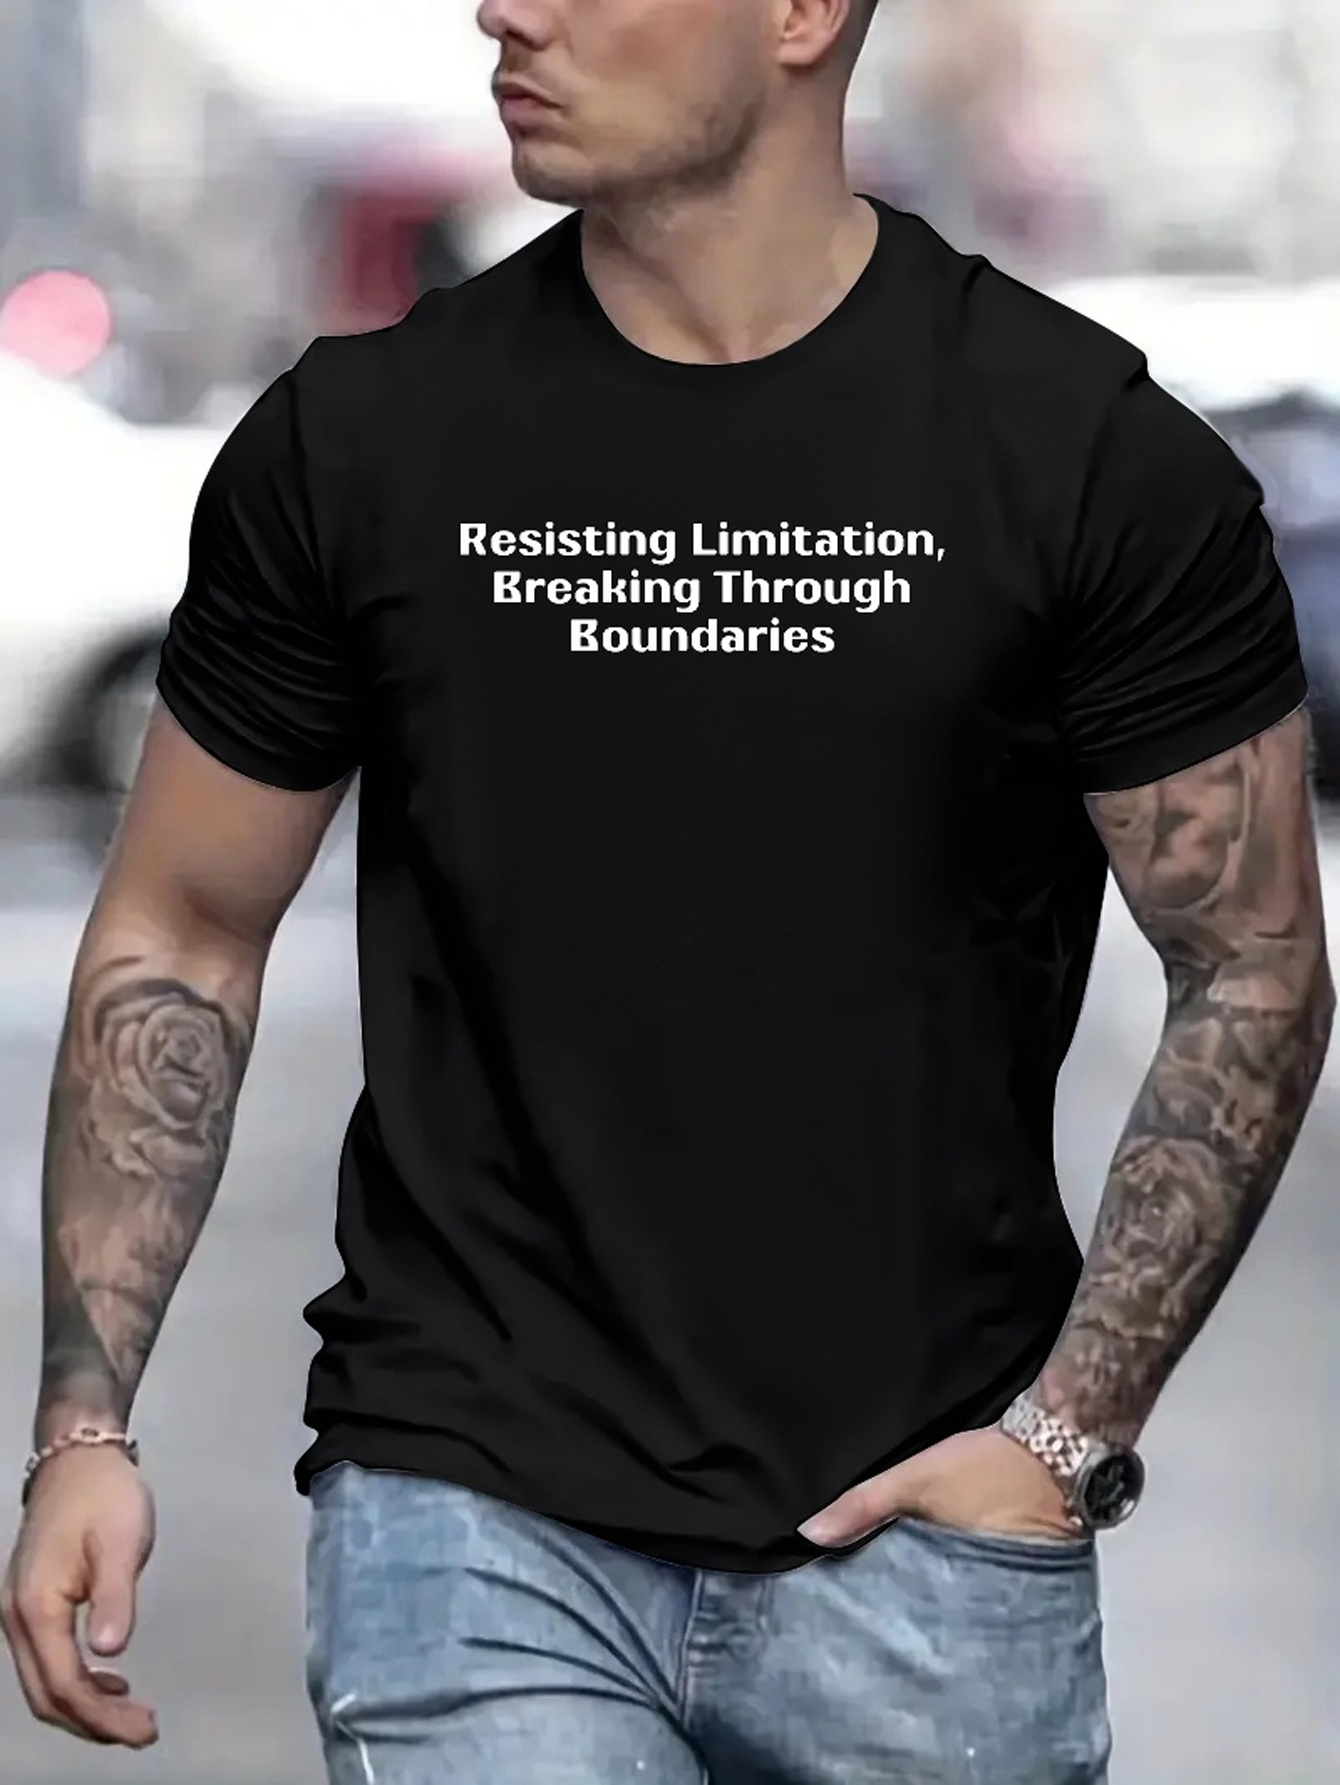 No Boundaries Shirts for Men